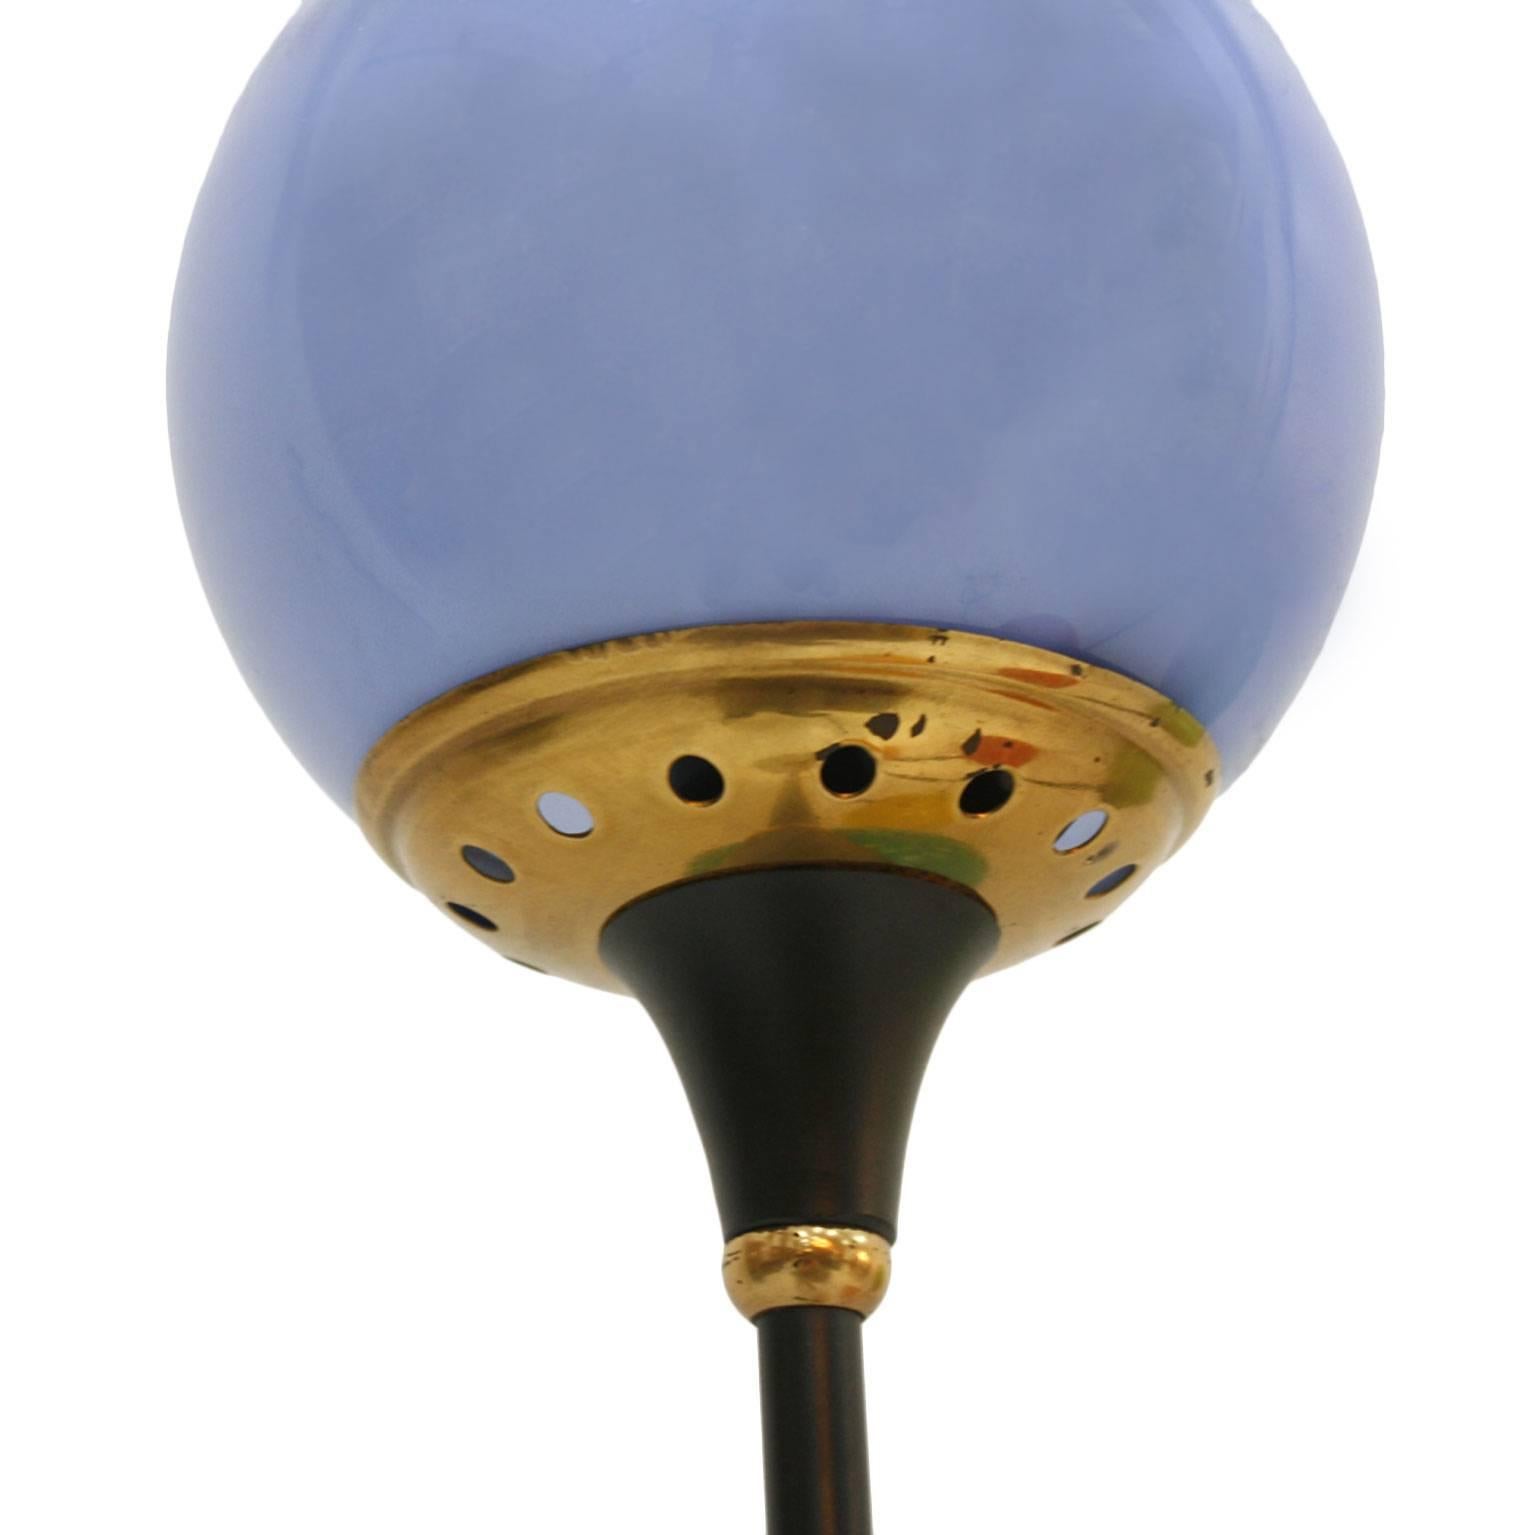 Hand-Carved Mid-Century Italian Coloured shades Floor Lamp, Designed by Stilnovo. 1950s